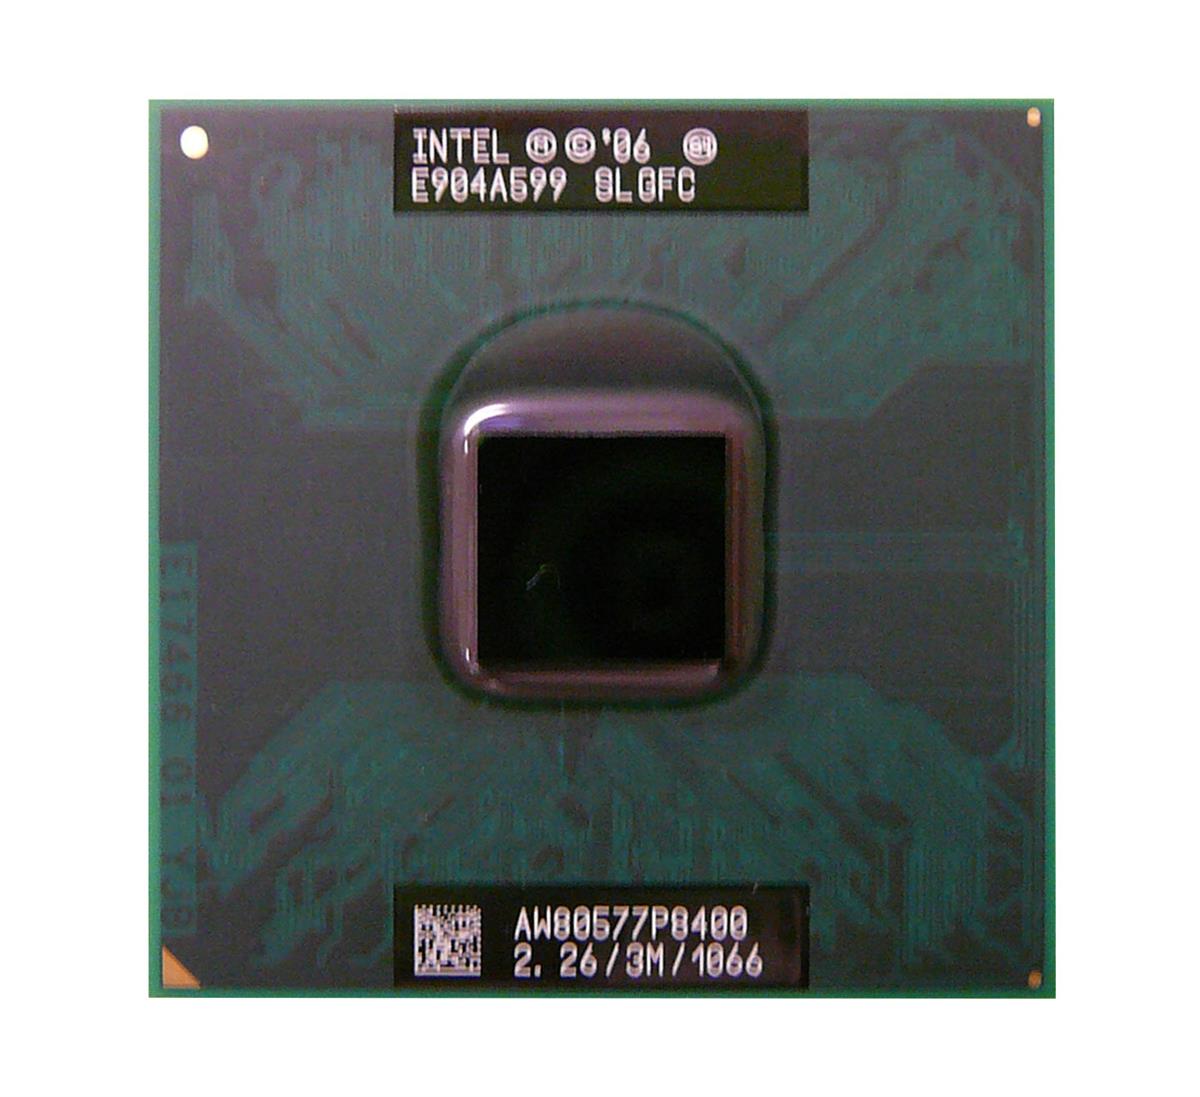 KU706AV HP 2.26GHz 1066MHz FSB 3MB L2 Cache Socket PGA479 Intel Core 2 Duo P8400 Mobile Processor Upgrade